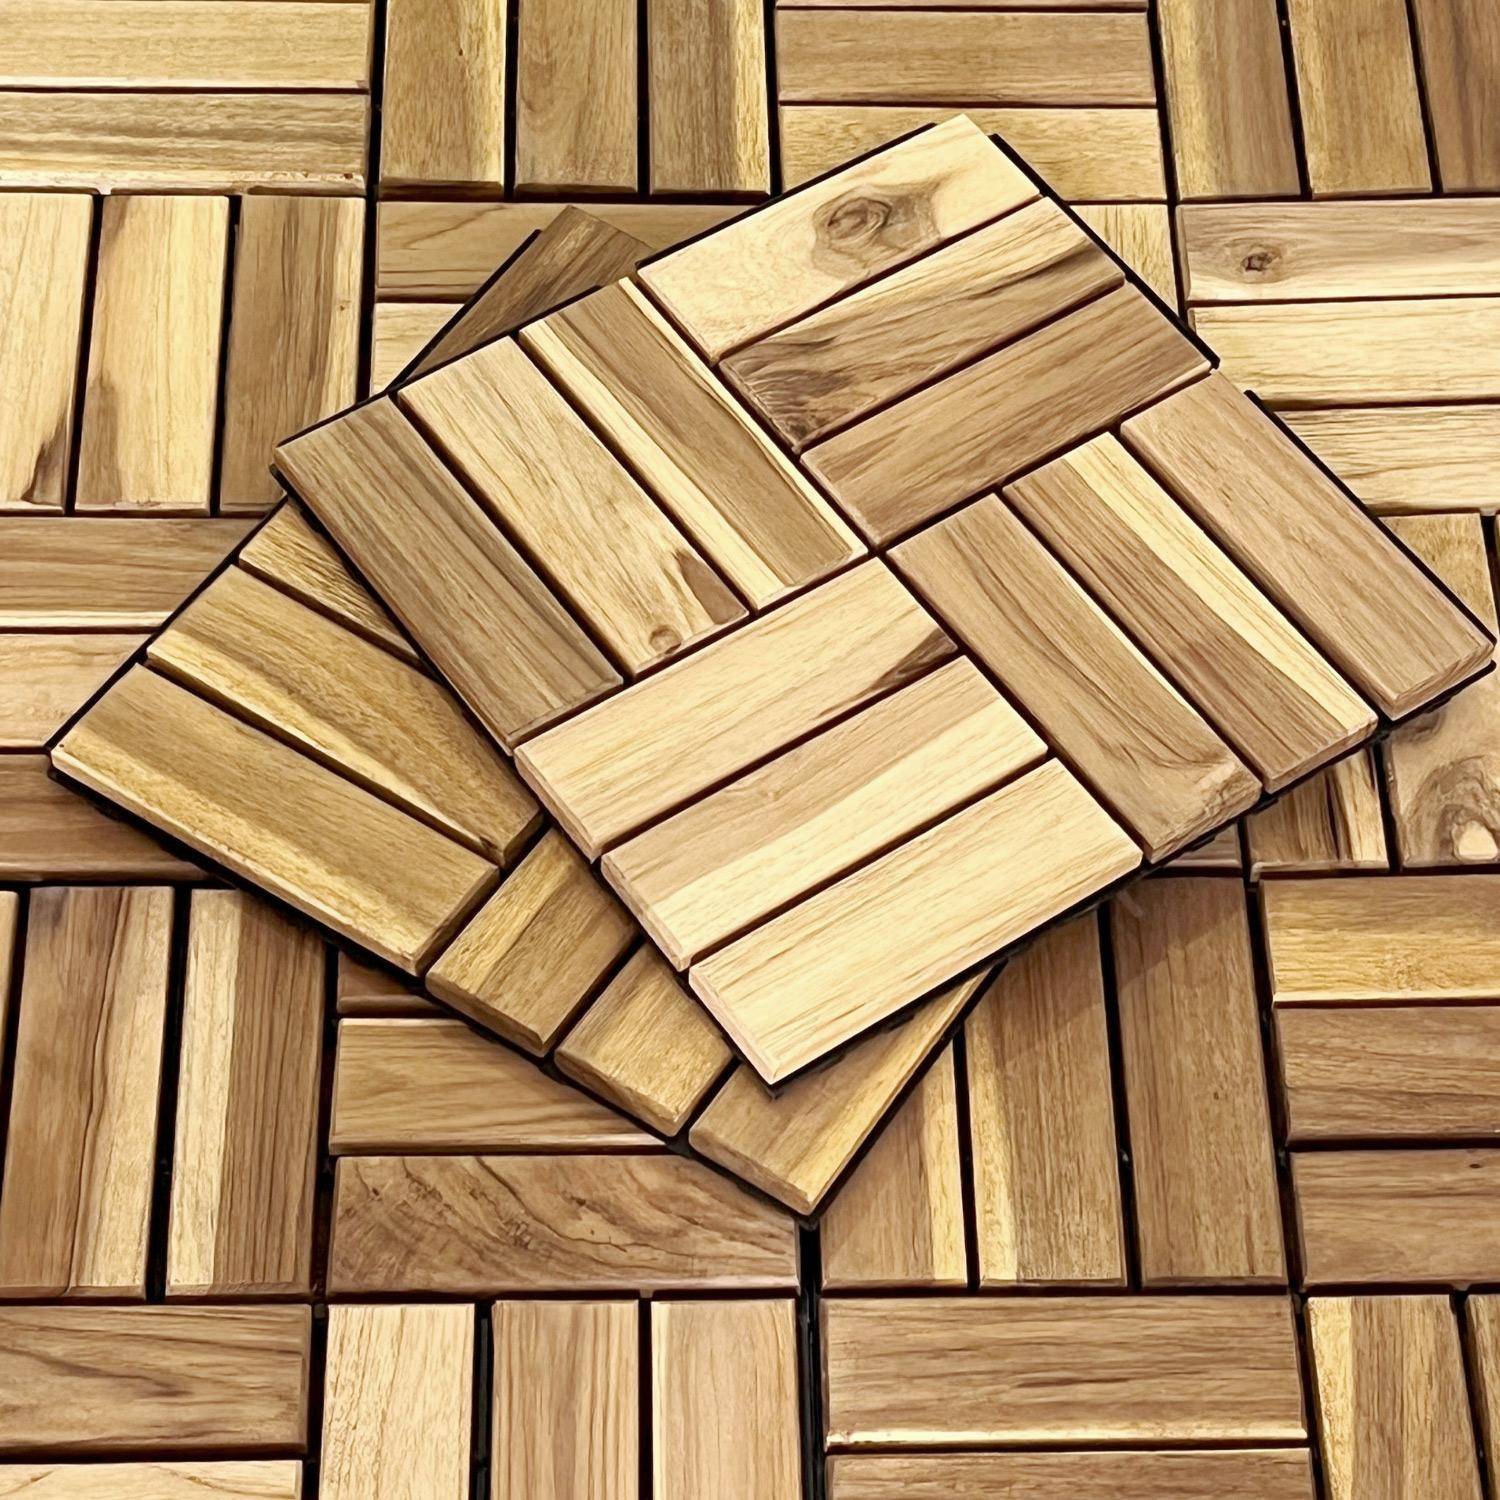 Lote de 36 baldosas de madera de acacia 30x30cm, modelo cuadrado, clip-on Photo5